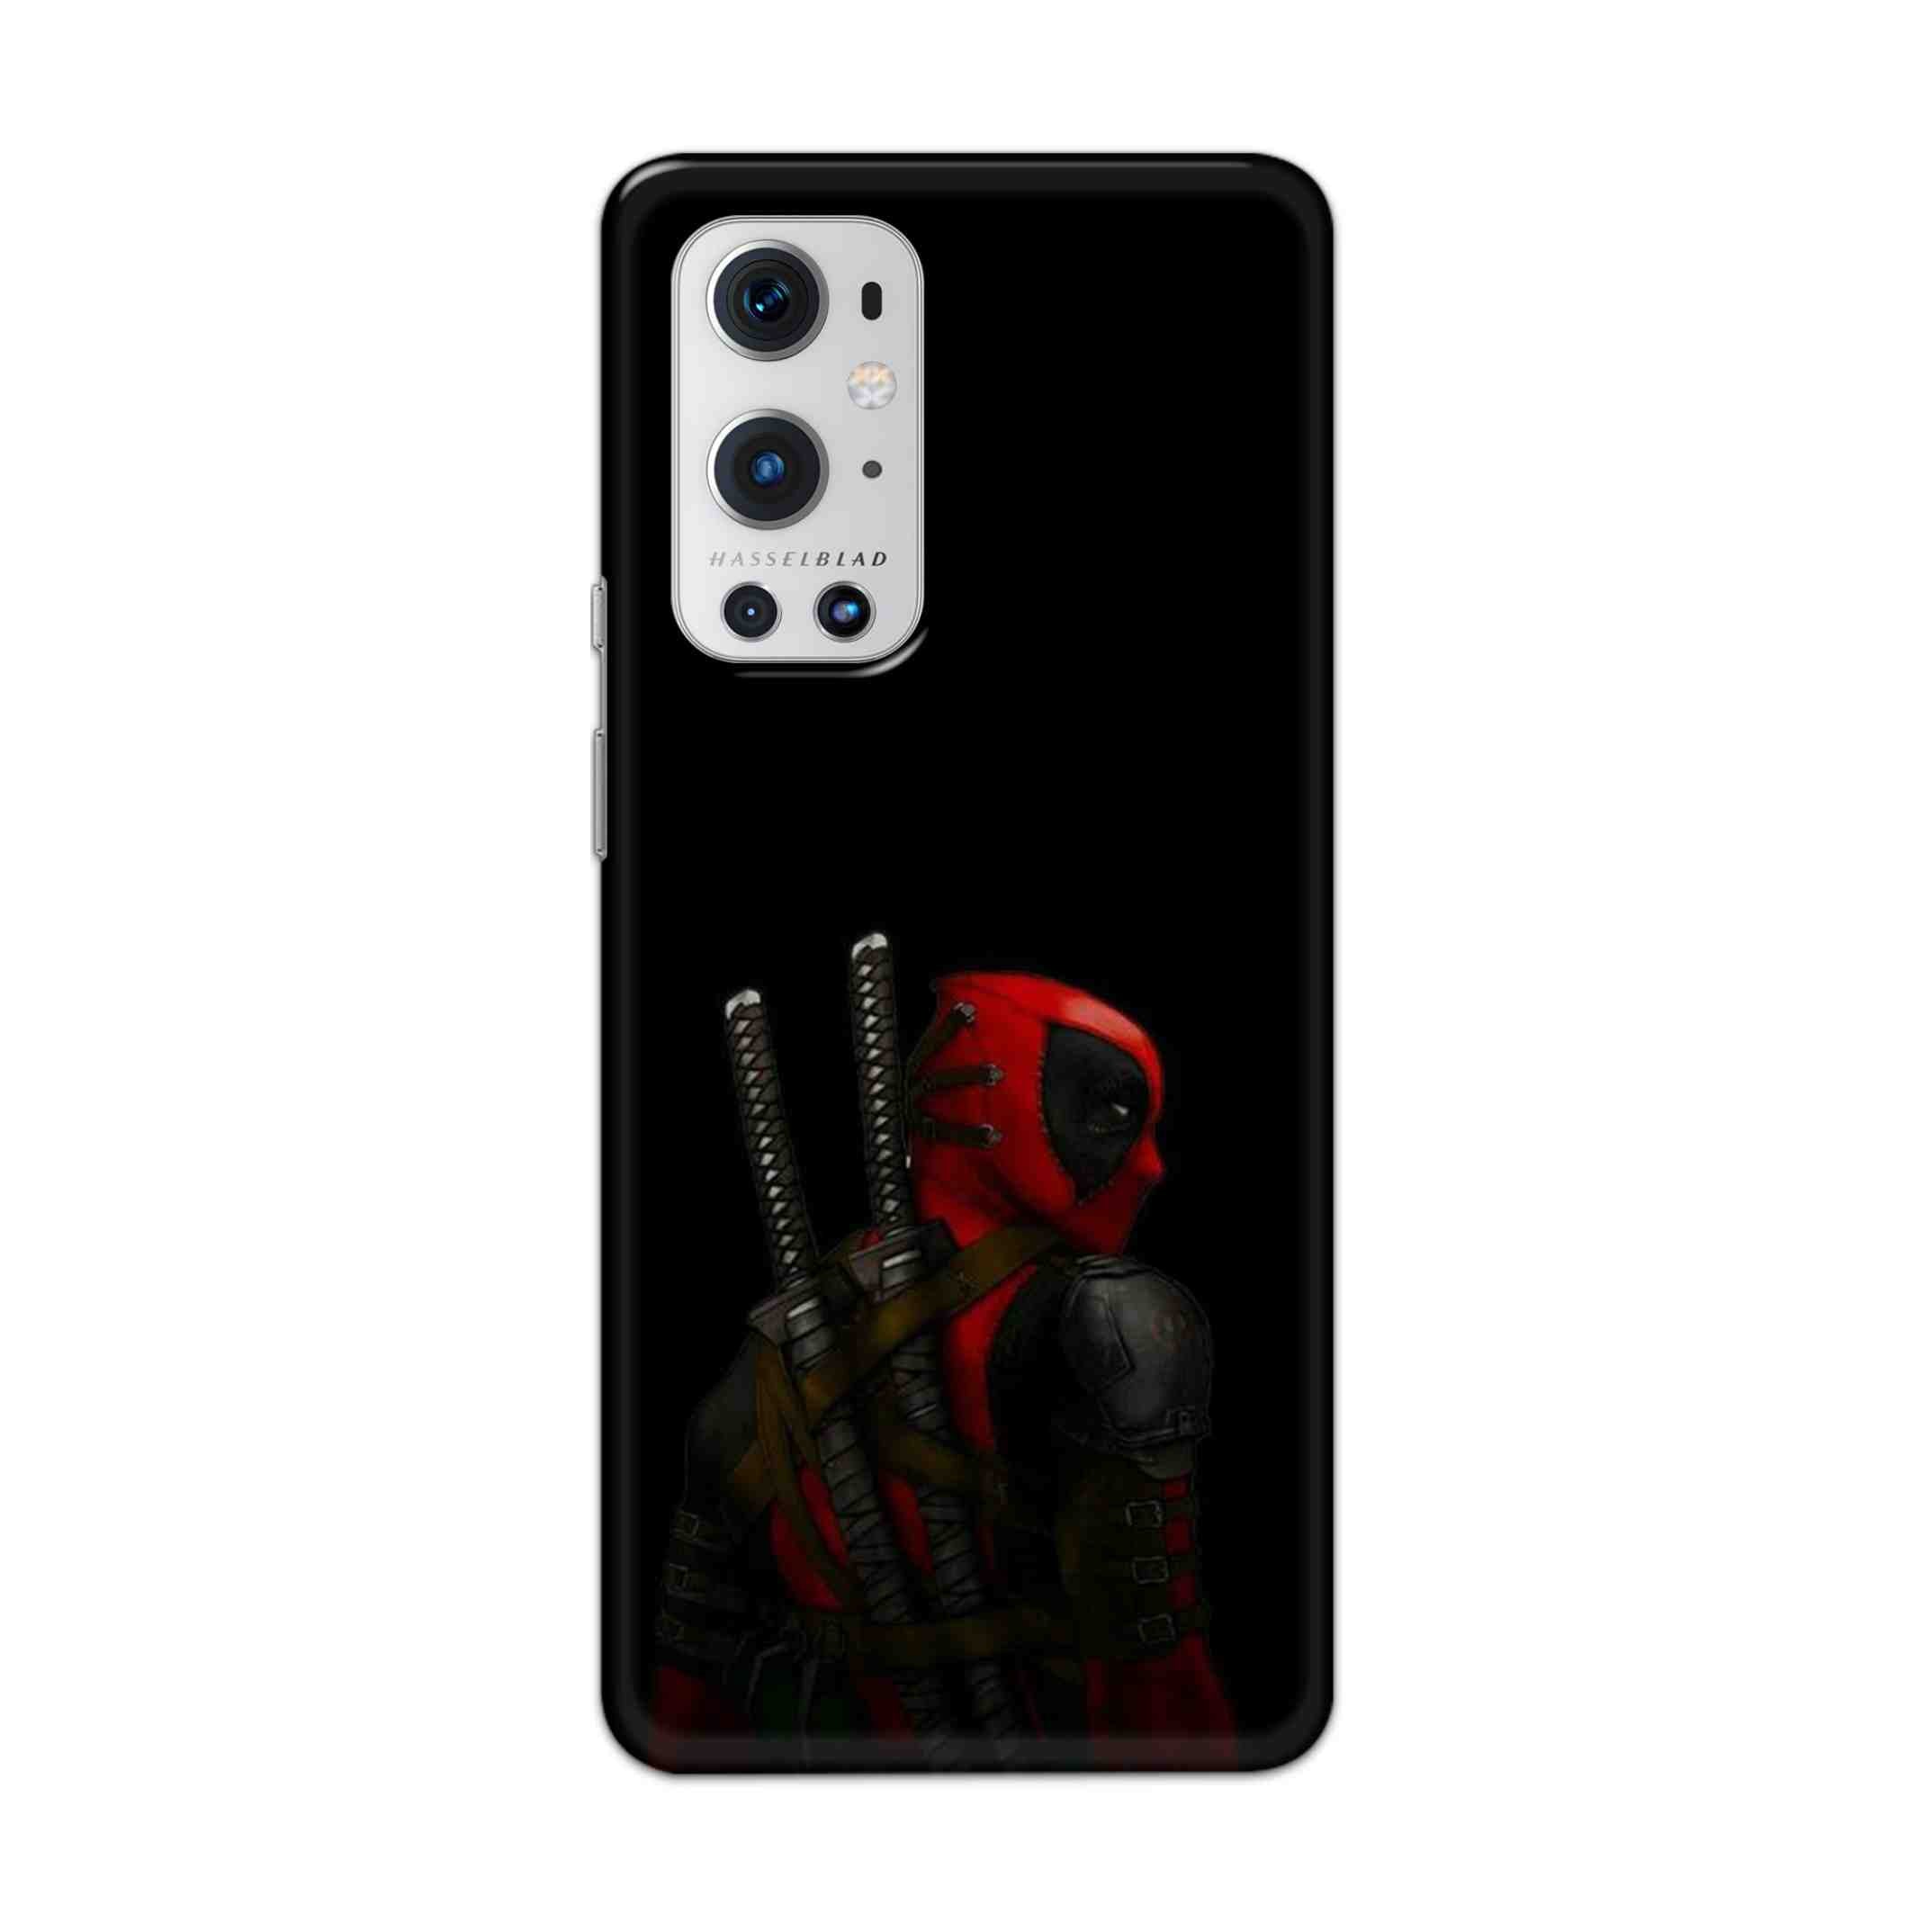 Buy Deadpool Hard Back Mobile Phone Case Cover For OnePlus 9 Pro Online